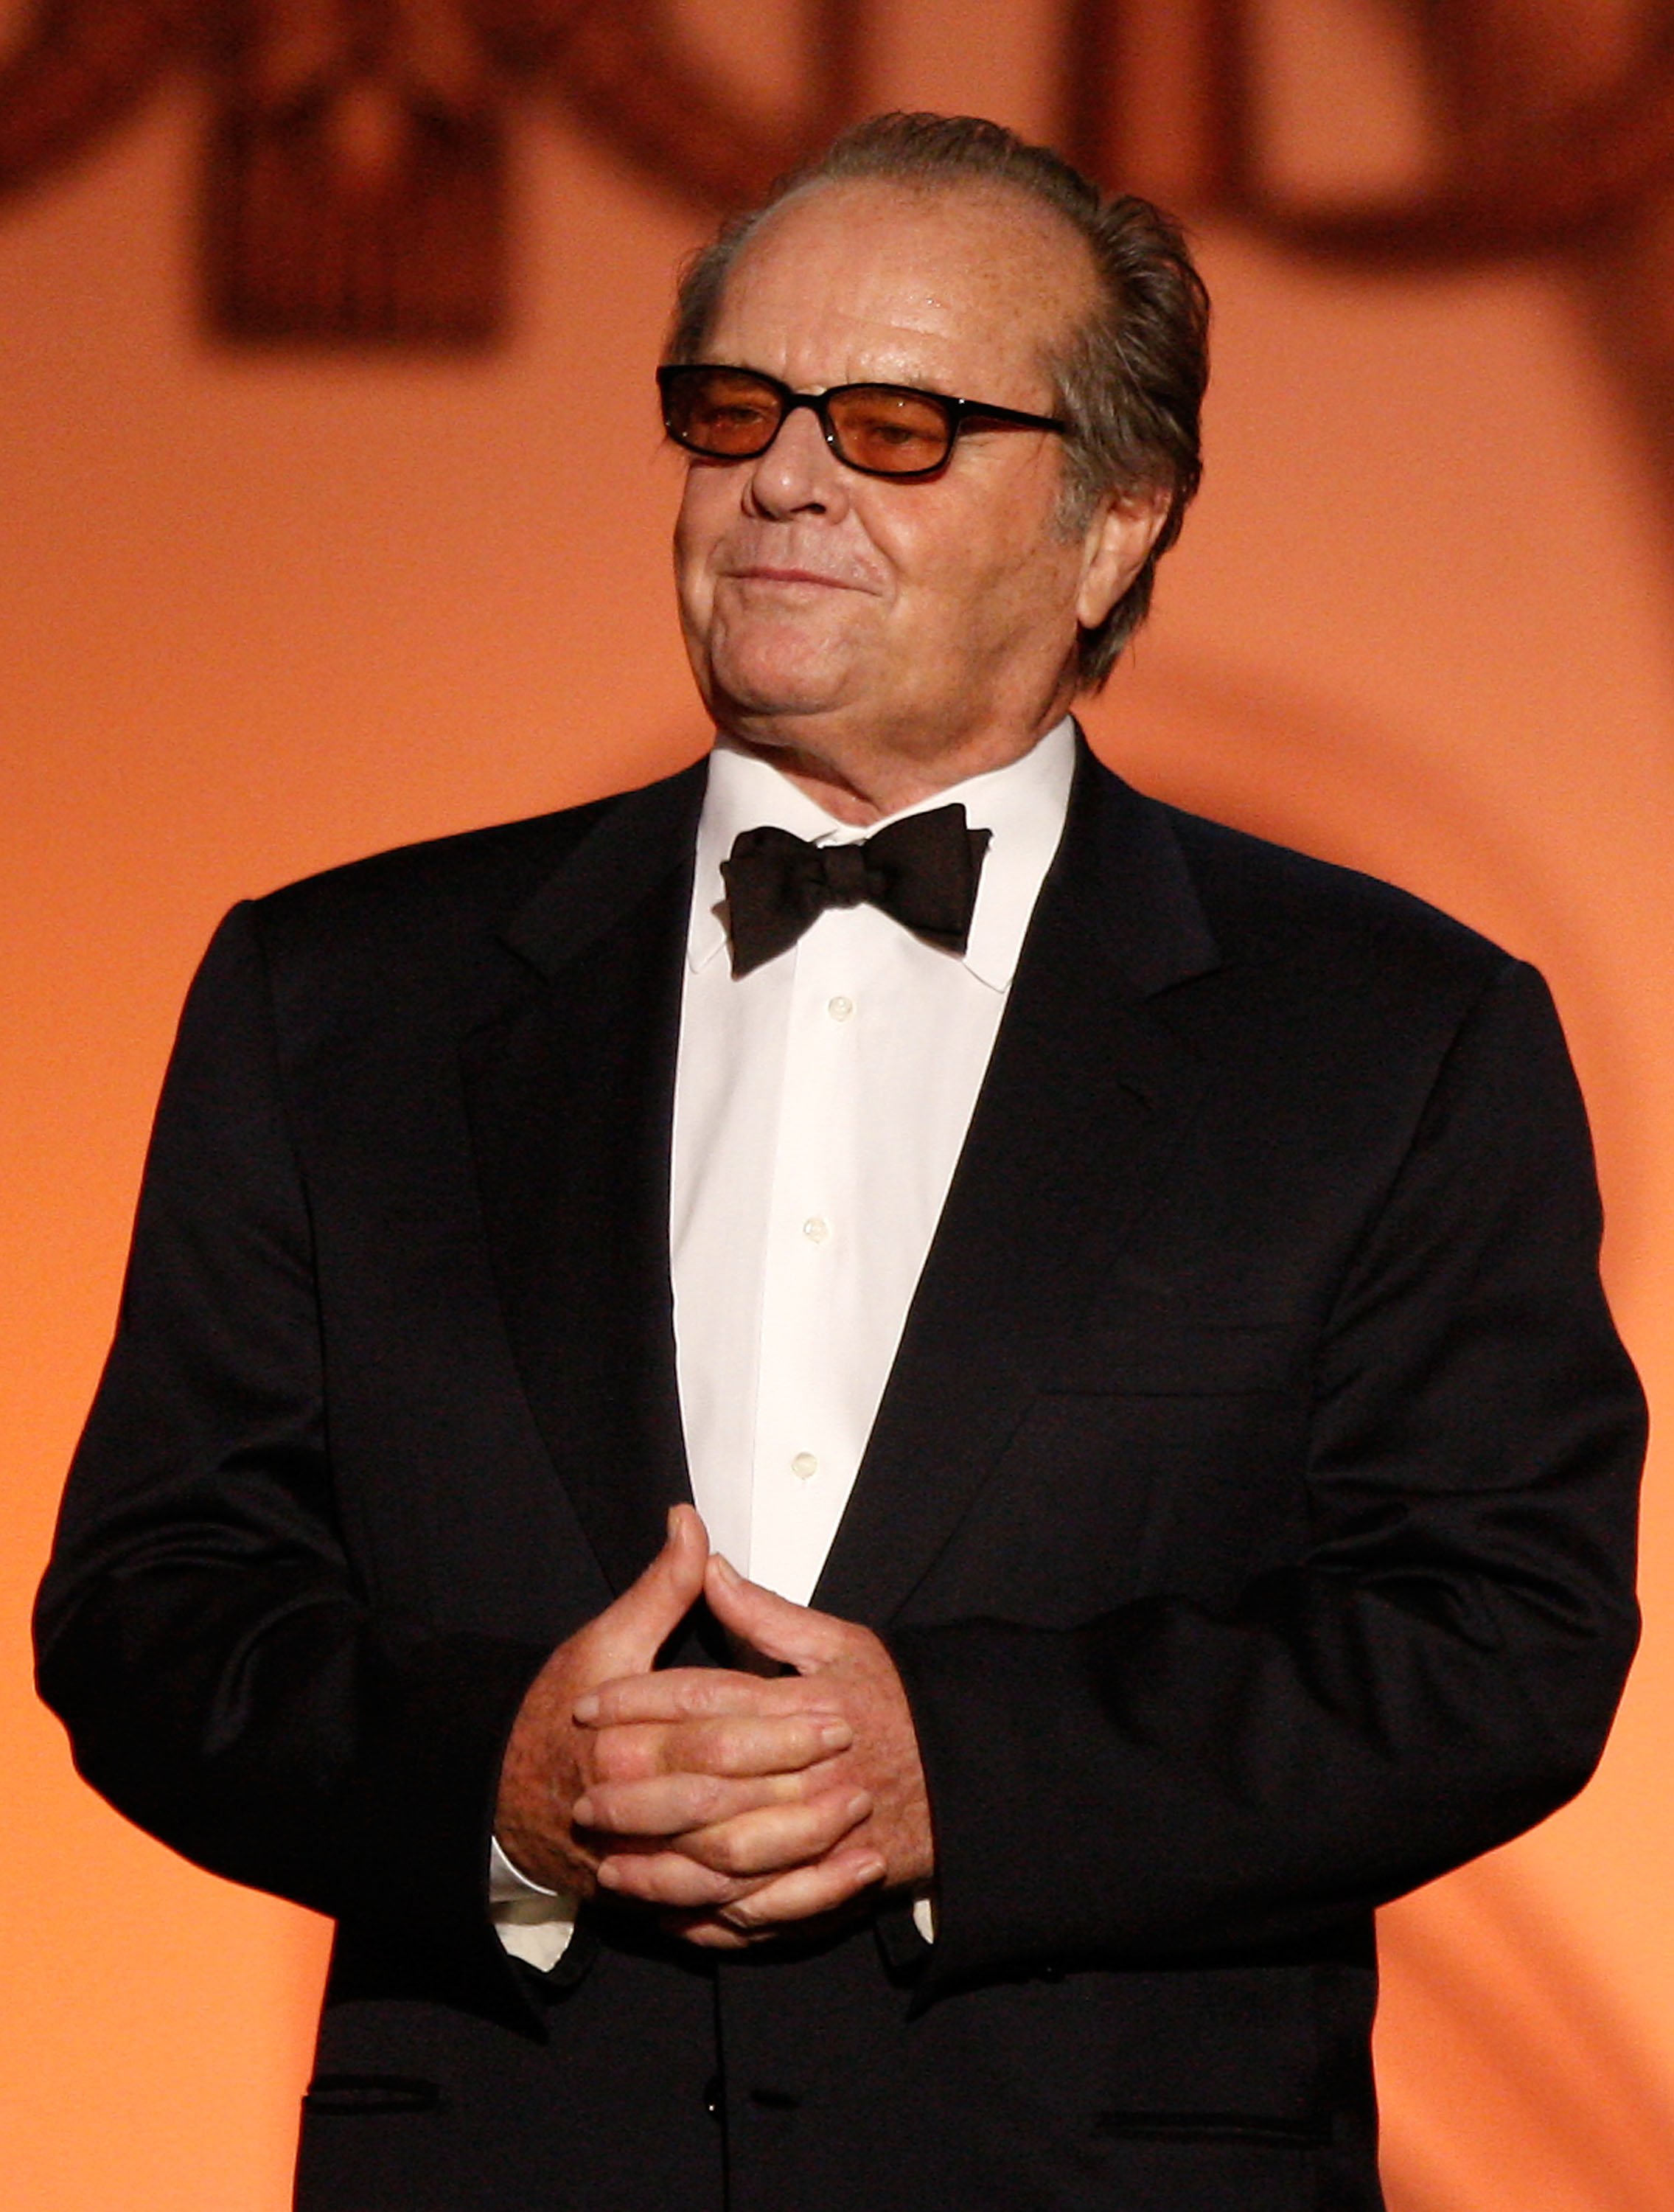 Jack Nicholson speaks onstage on June 11, 2009, in Culver City, California. | Source: Getty Images.